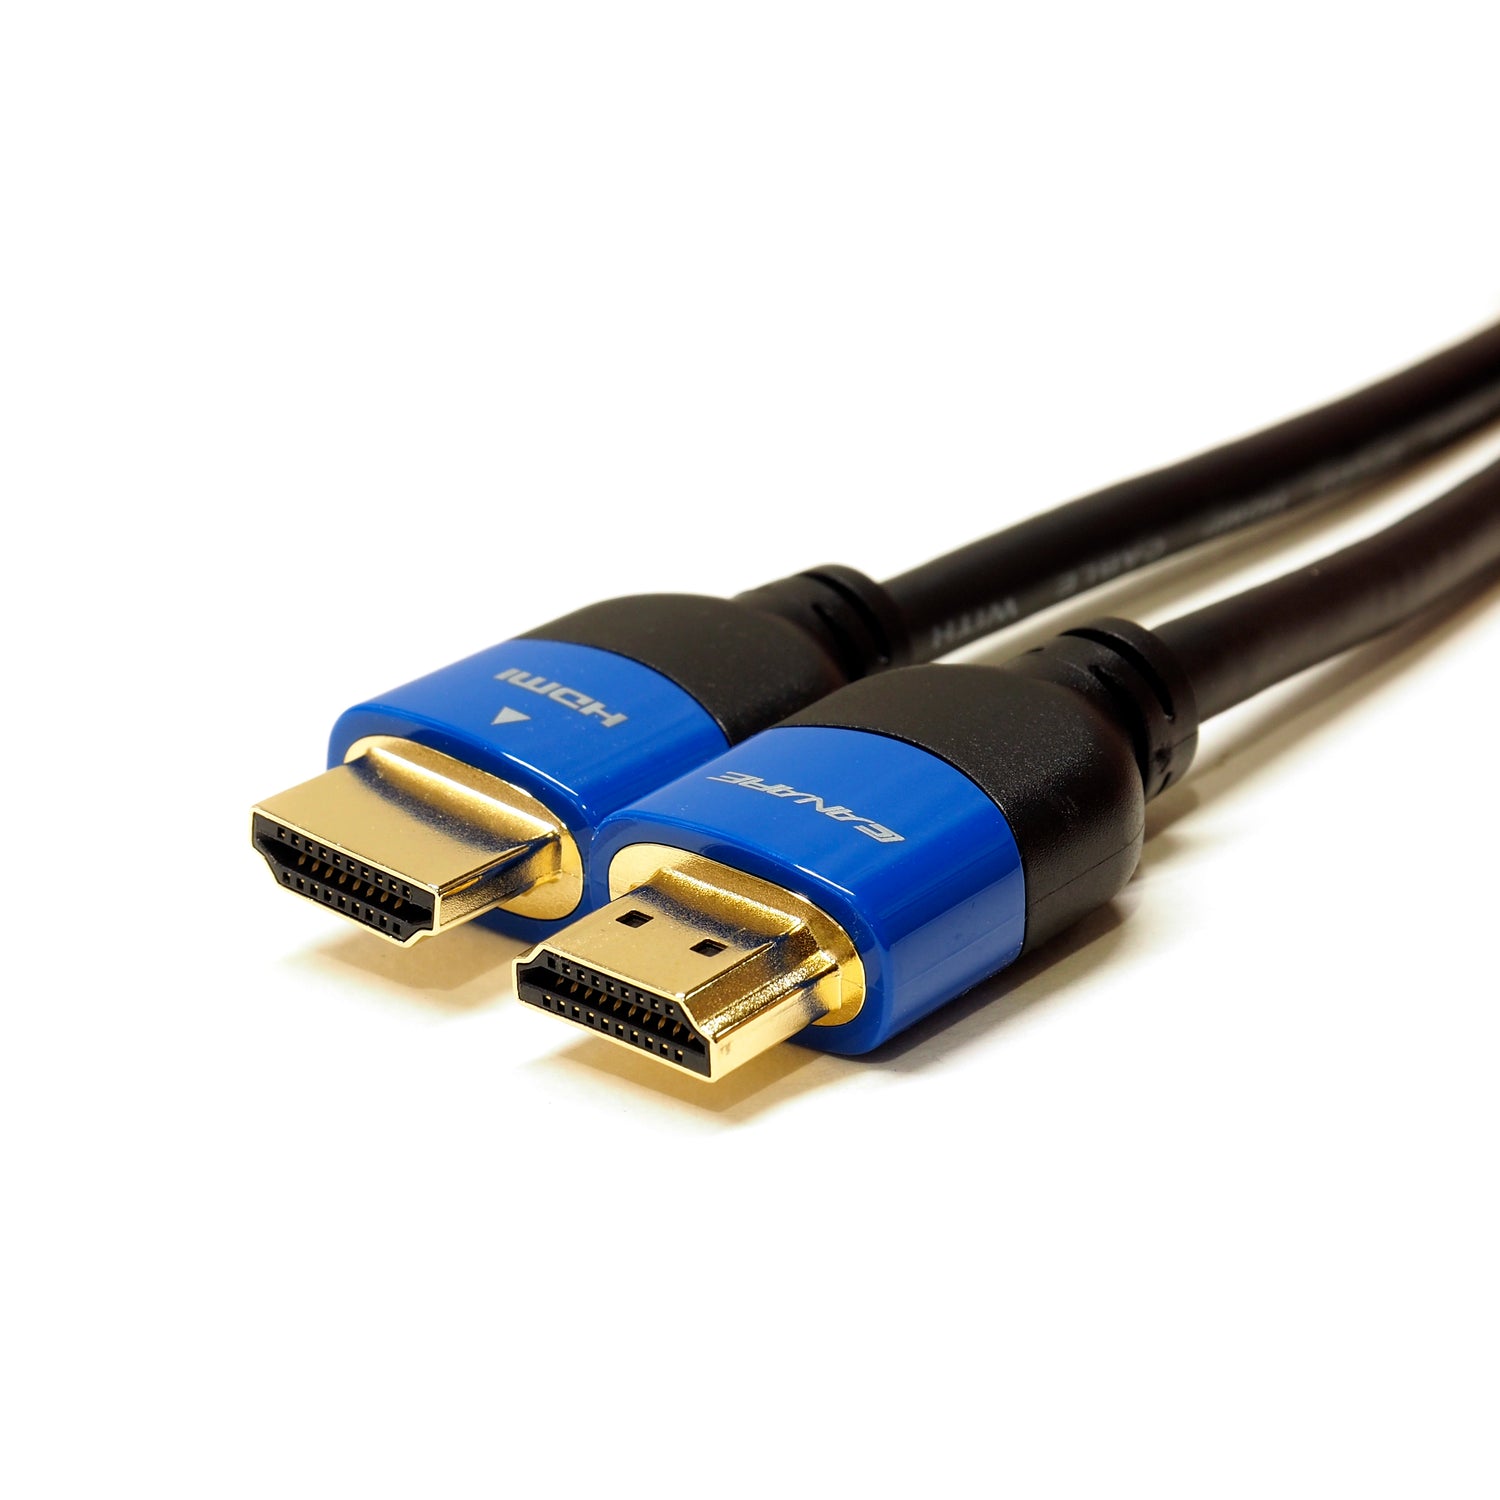 021. HDMI Cables